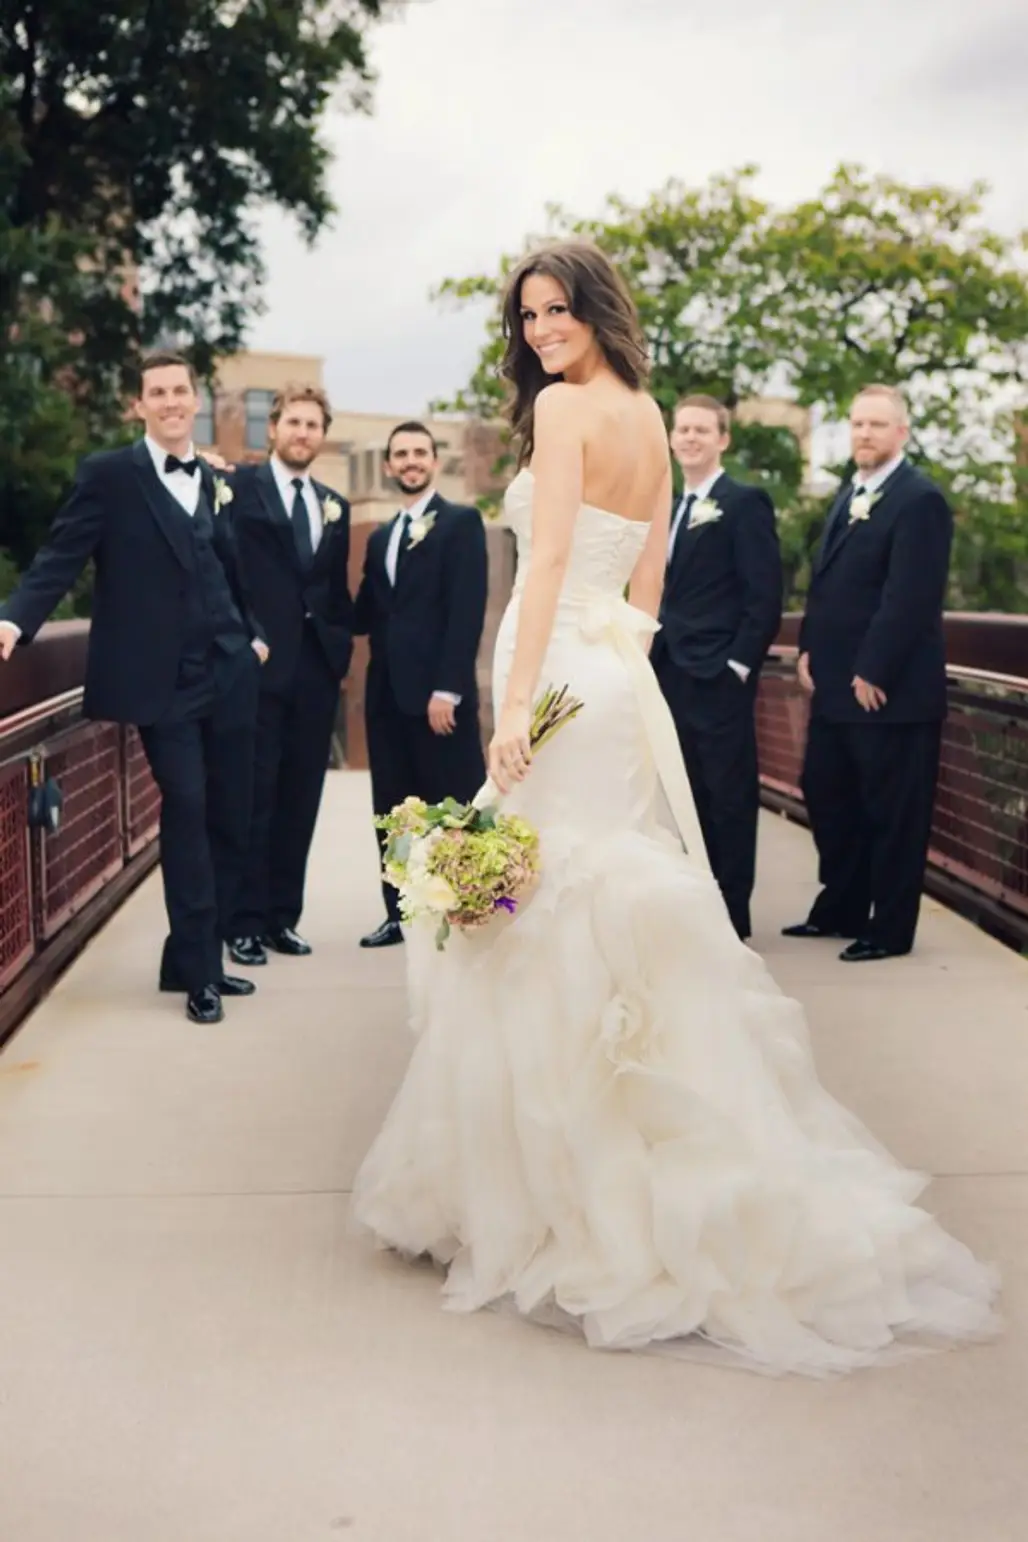 wedding dress,bride,woman,man,bridal clothing,